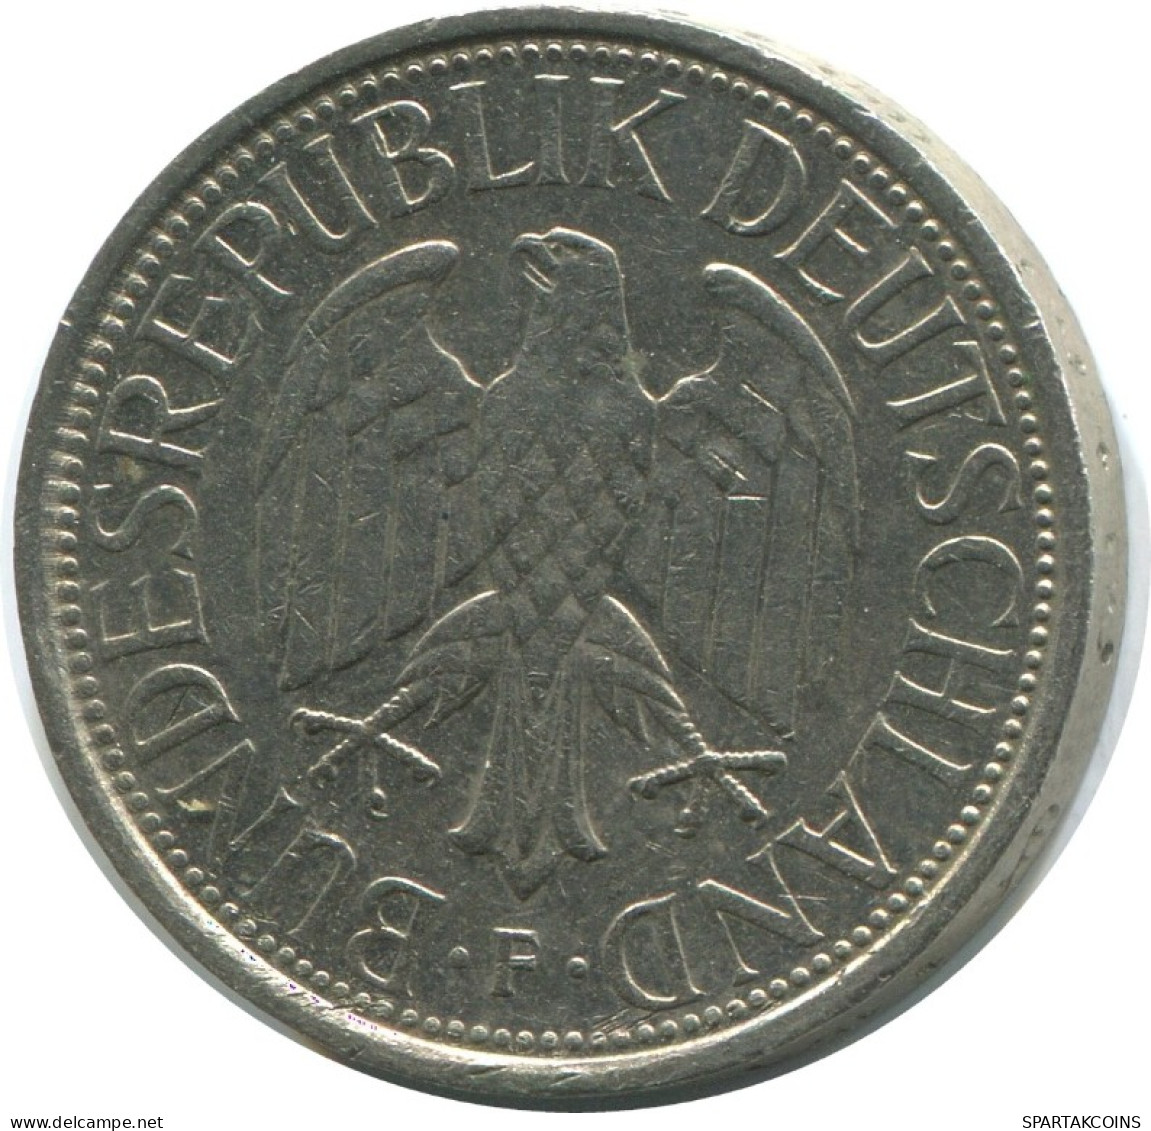 1 DM 1990 F BRD ALEMANIA Moneda GERMANY #AG309.3.E.A - 1 Mark